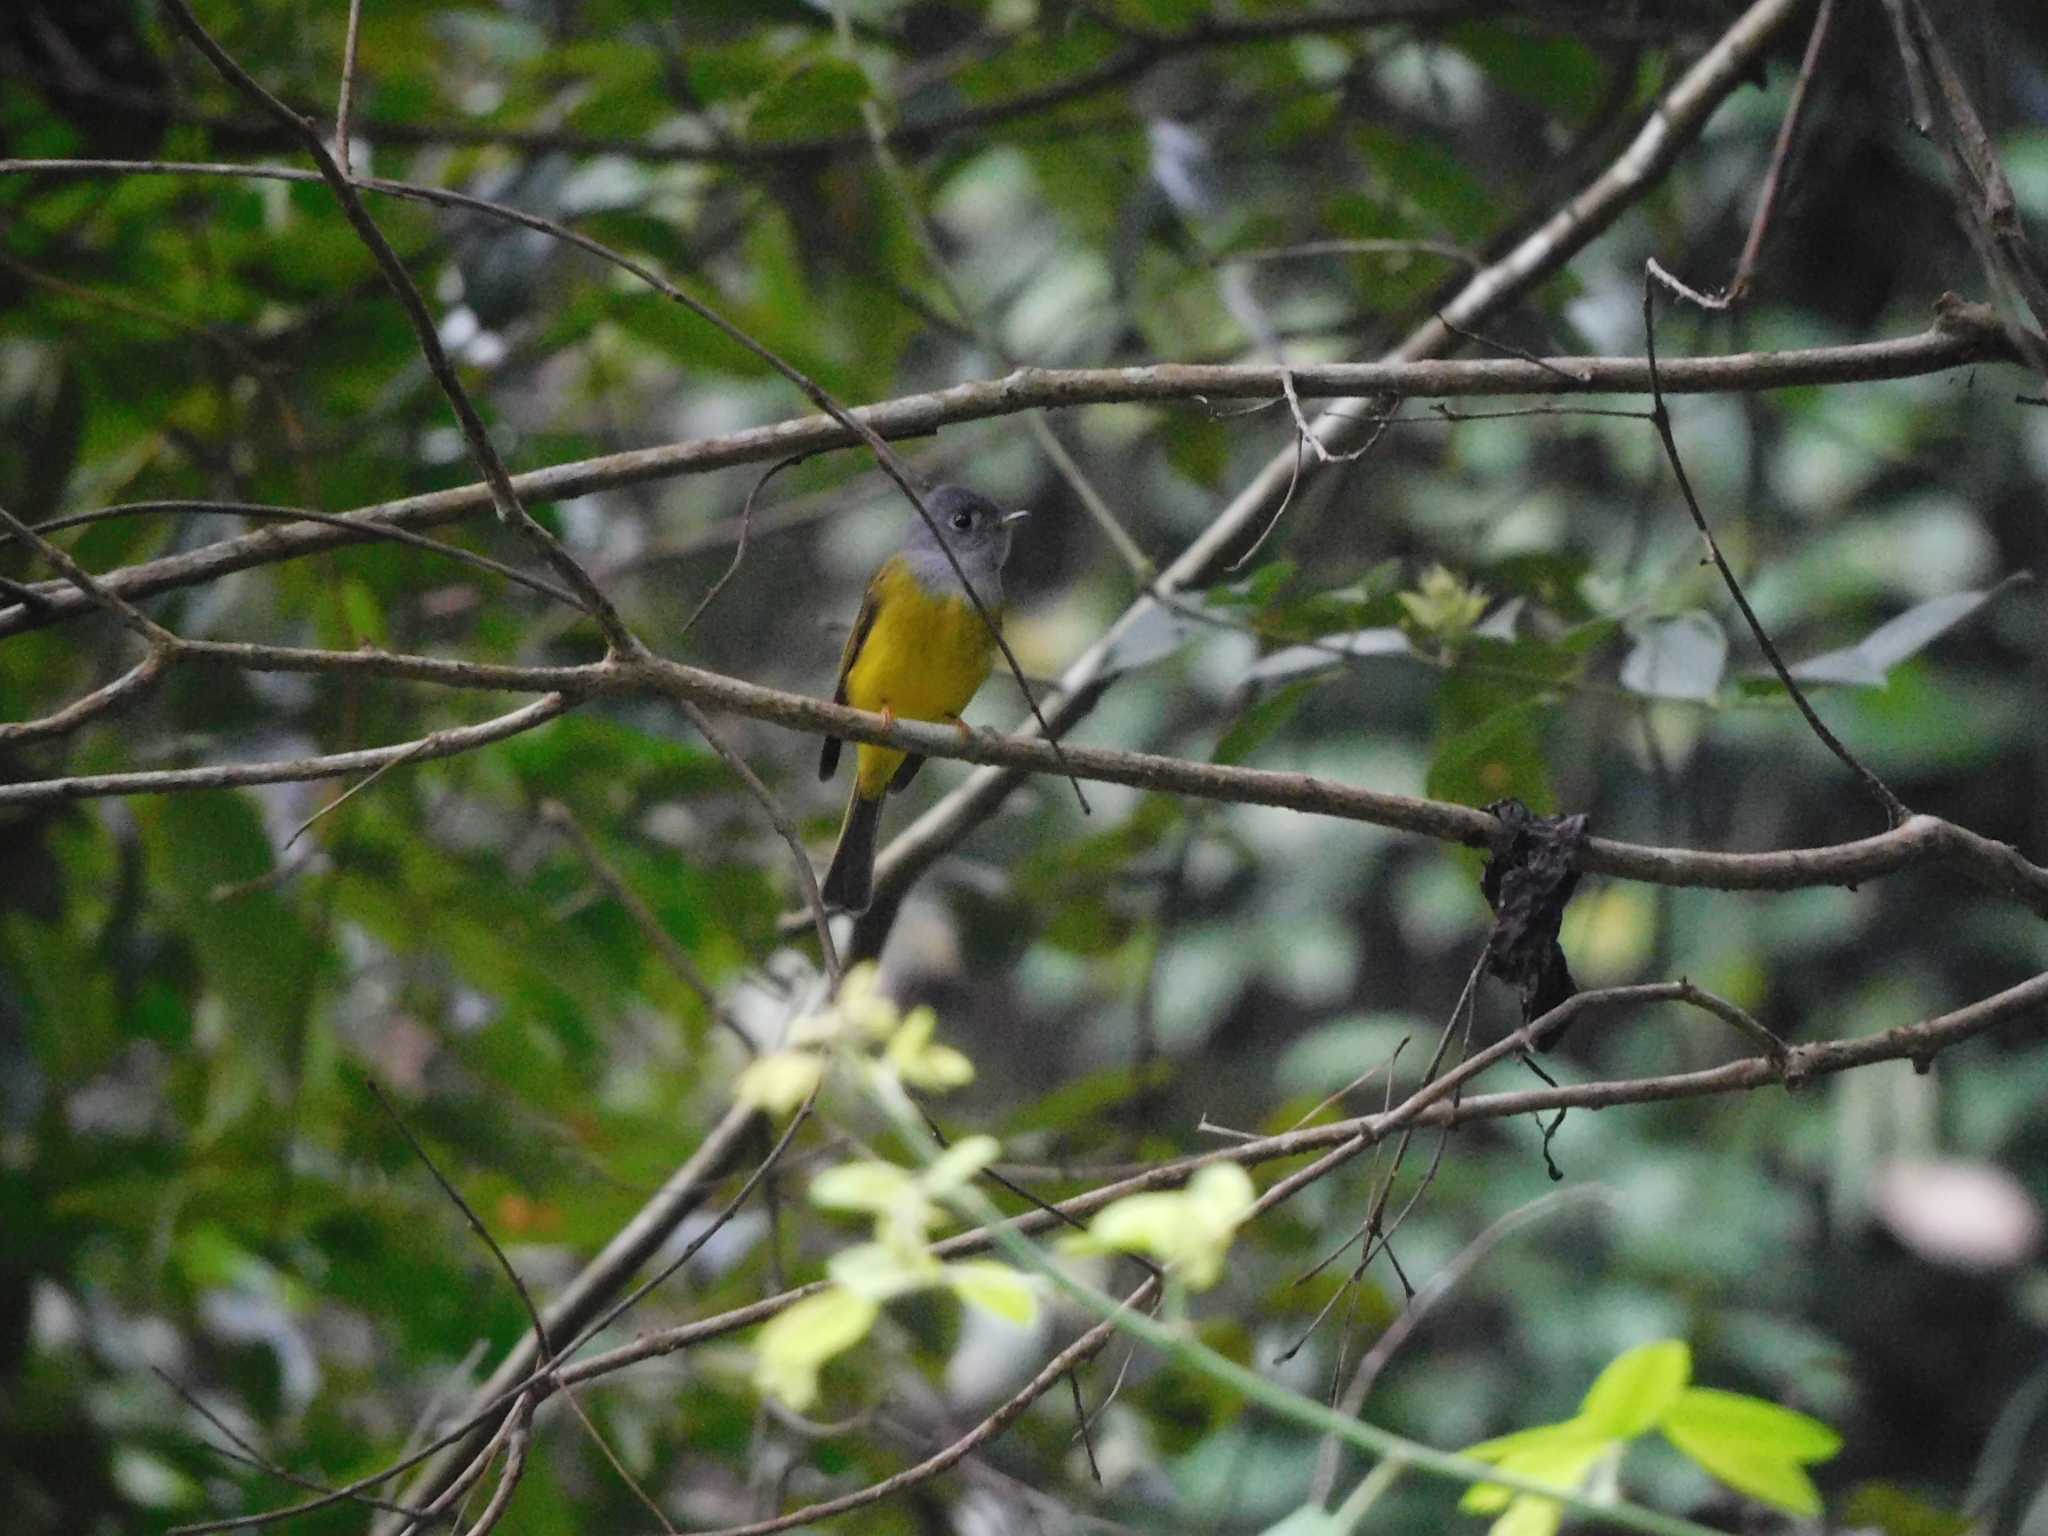 Photo of Grey-headed Canary-flycatcher at Tam Dao National Park by mkmole